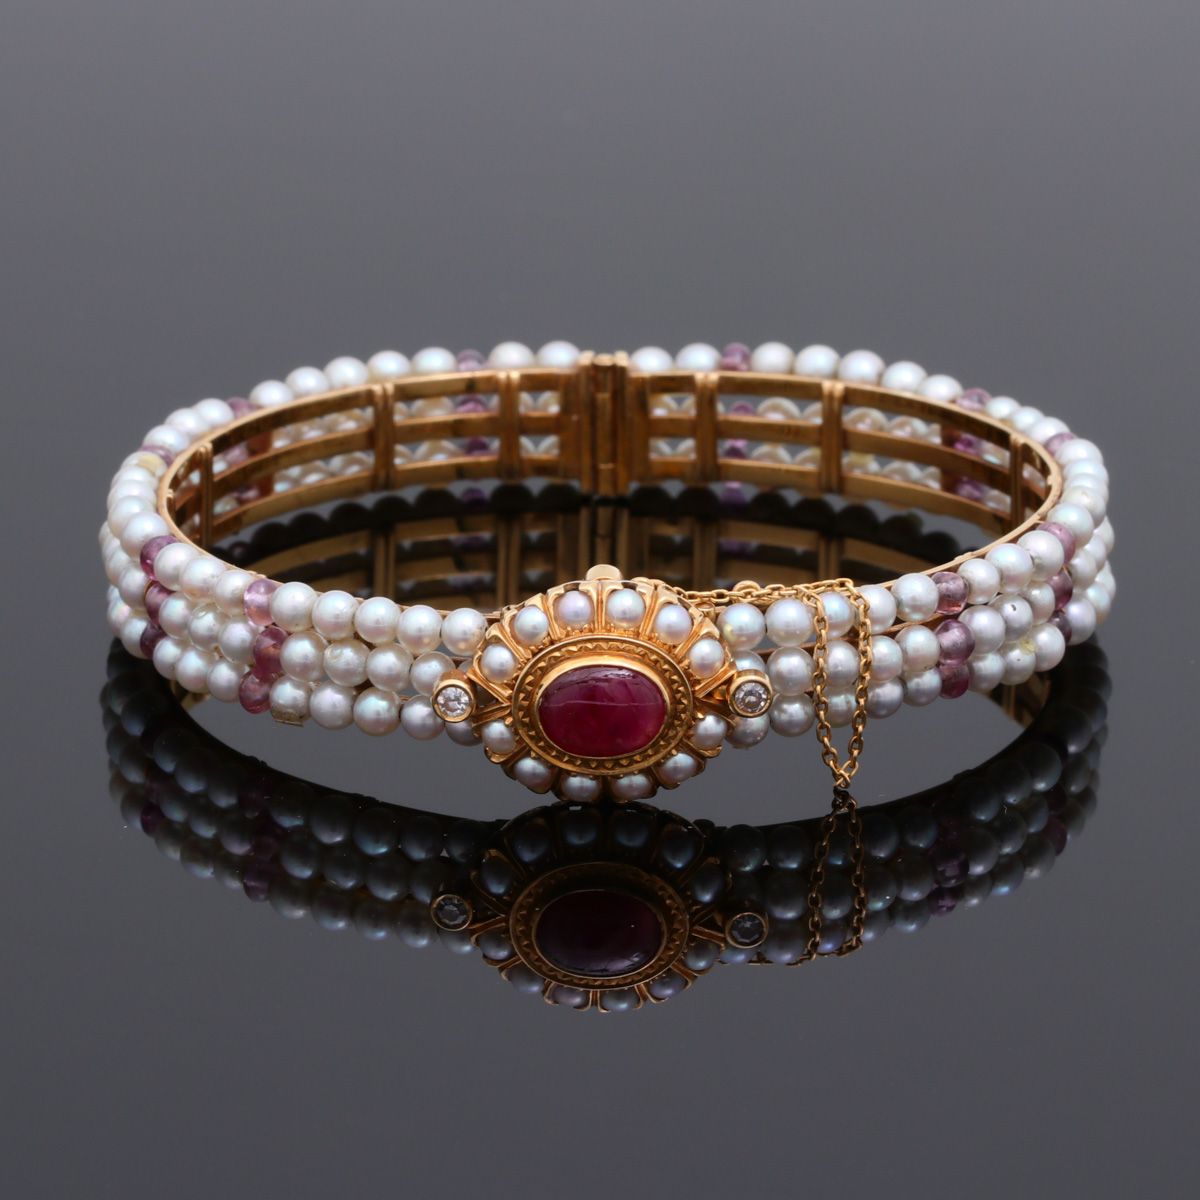 A bracelet A BRACELET 800/000 gold, set with culture pearls, cabochon cut ruby a&hellip;